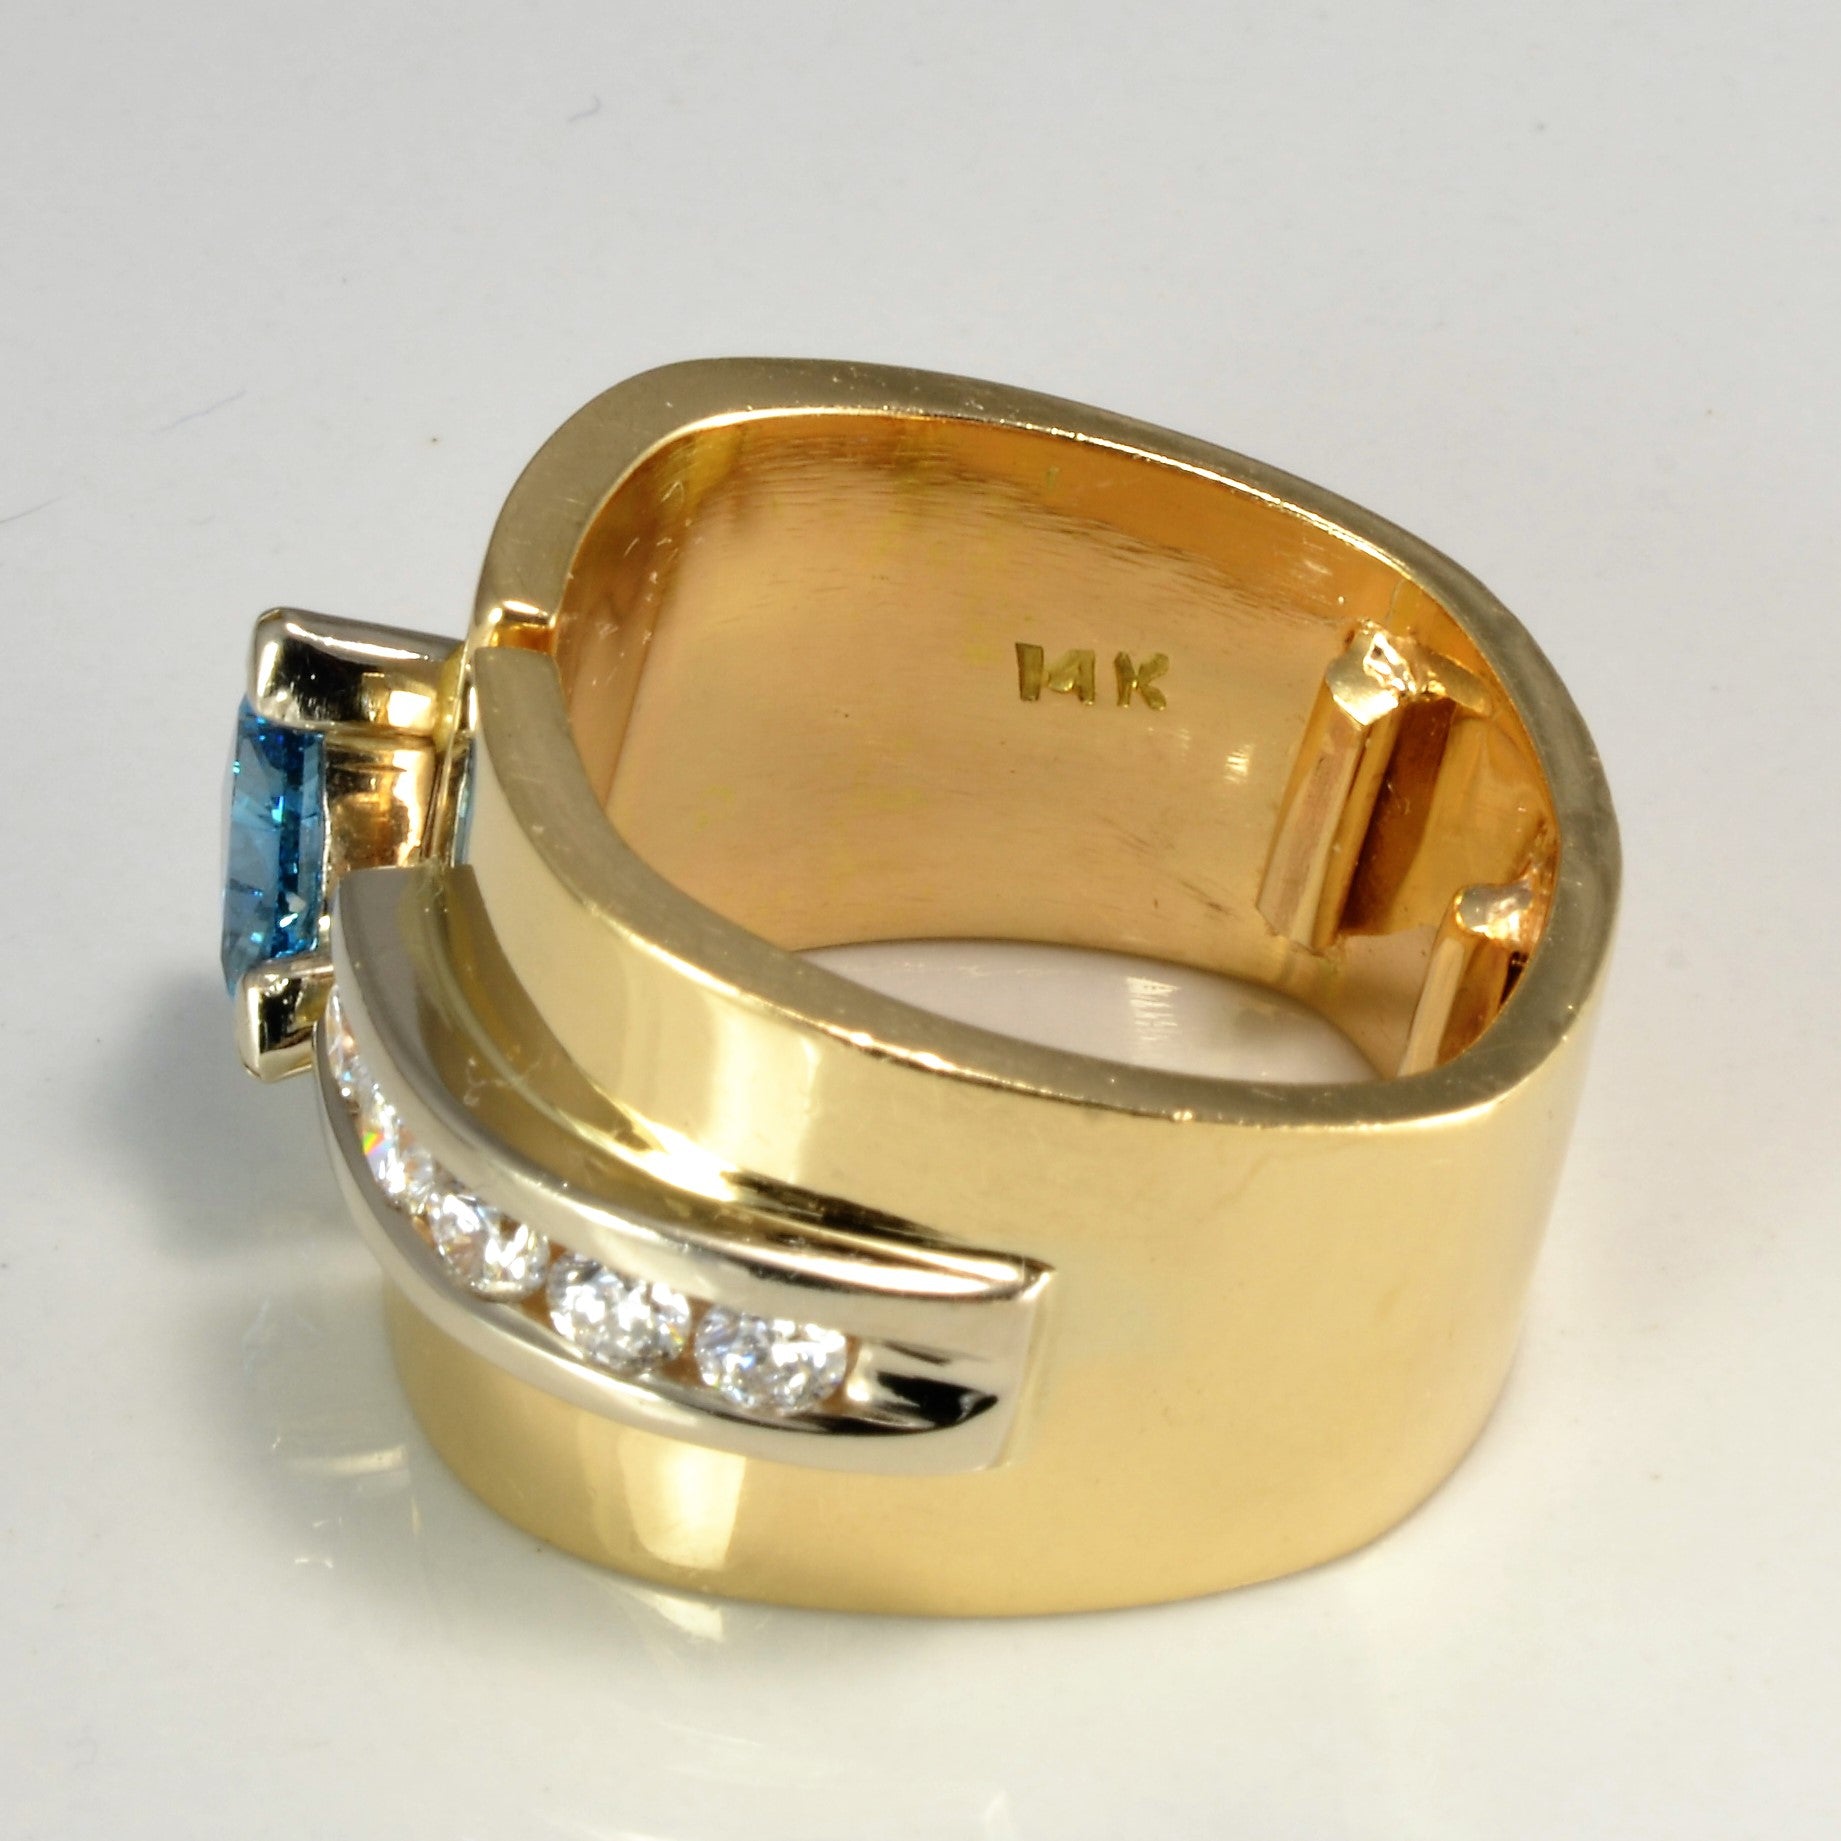 Trillion Cut Blue Diamond Ring | 1.30ctw | SZ 9.5 |